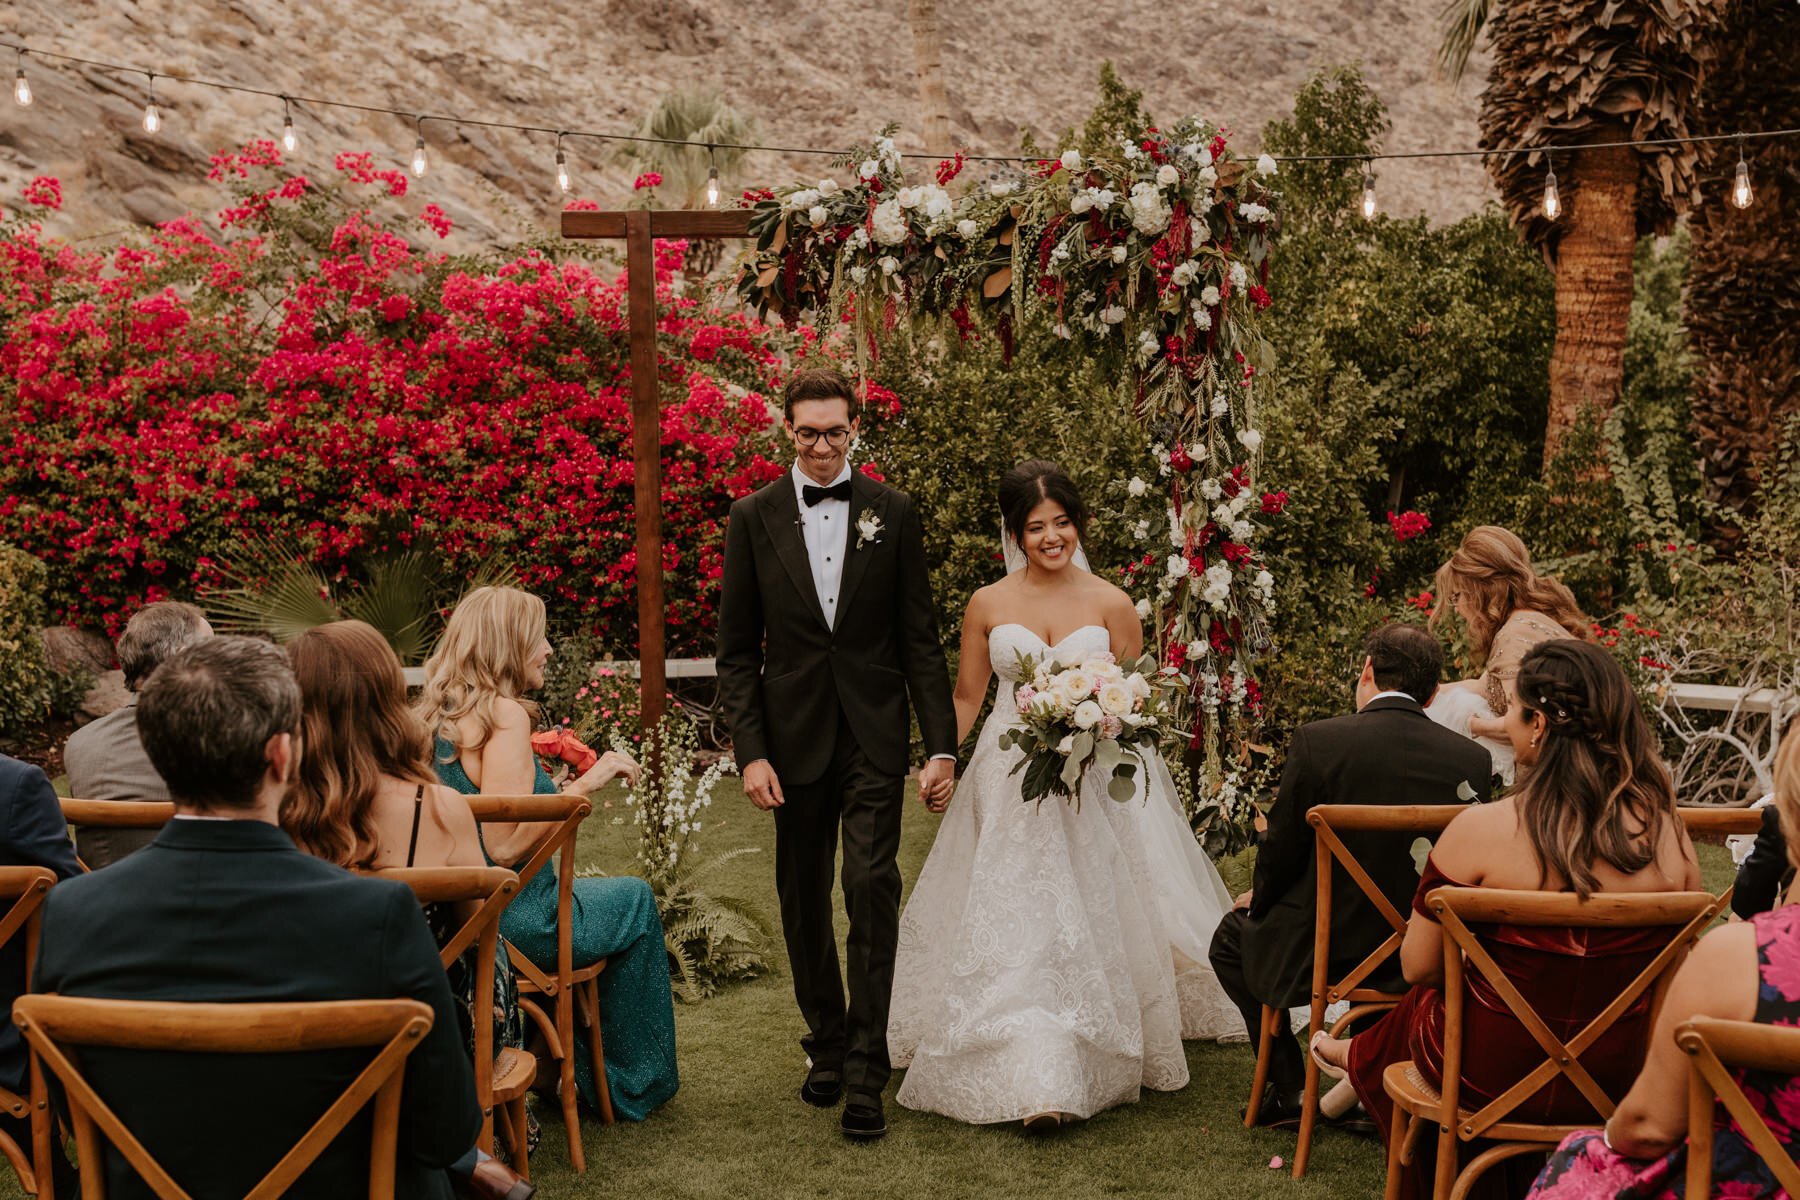 Spencer’s Restaurant Palm Springs Wedding Ceremony, Palm Springs Wedding Photographer | Tida Svy Photo